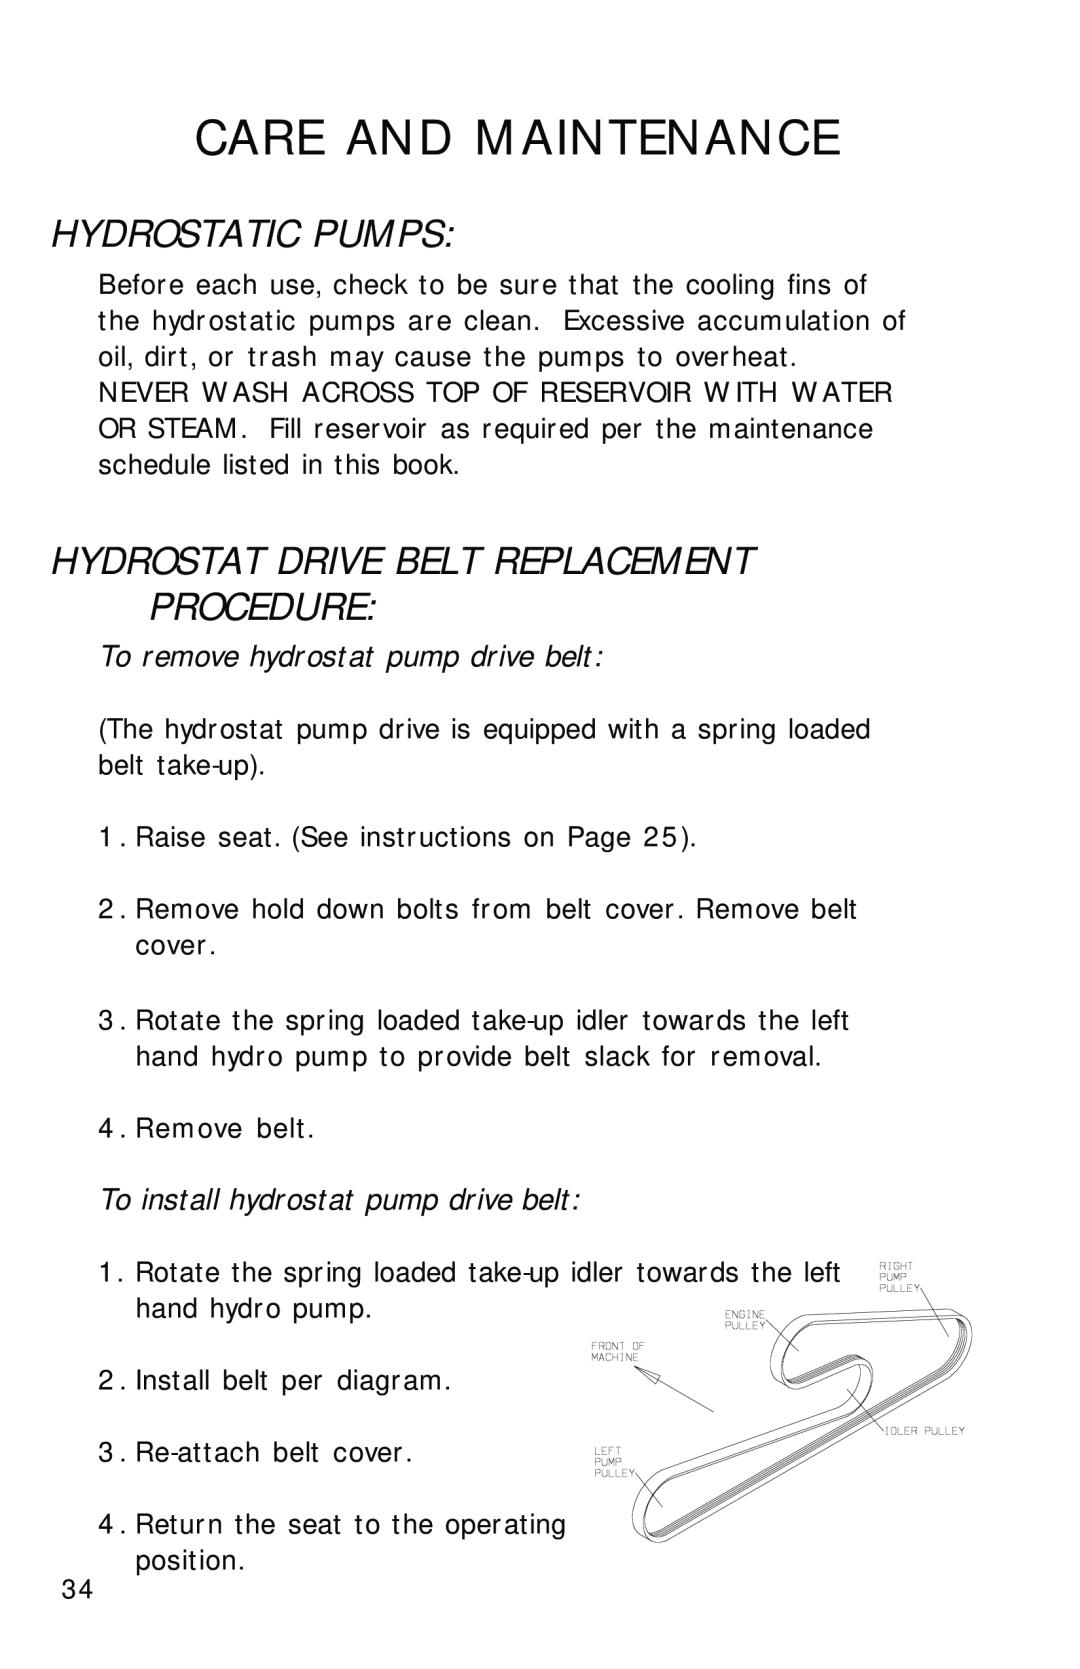 Dixon ZTR 2700, 12828-0603 manual Hydrostatic Pumps, Hydrostat Drive Belt Replacement Procedure, Care And Maintenance 